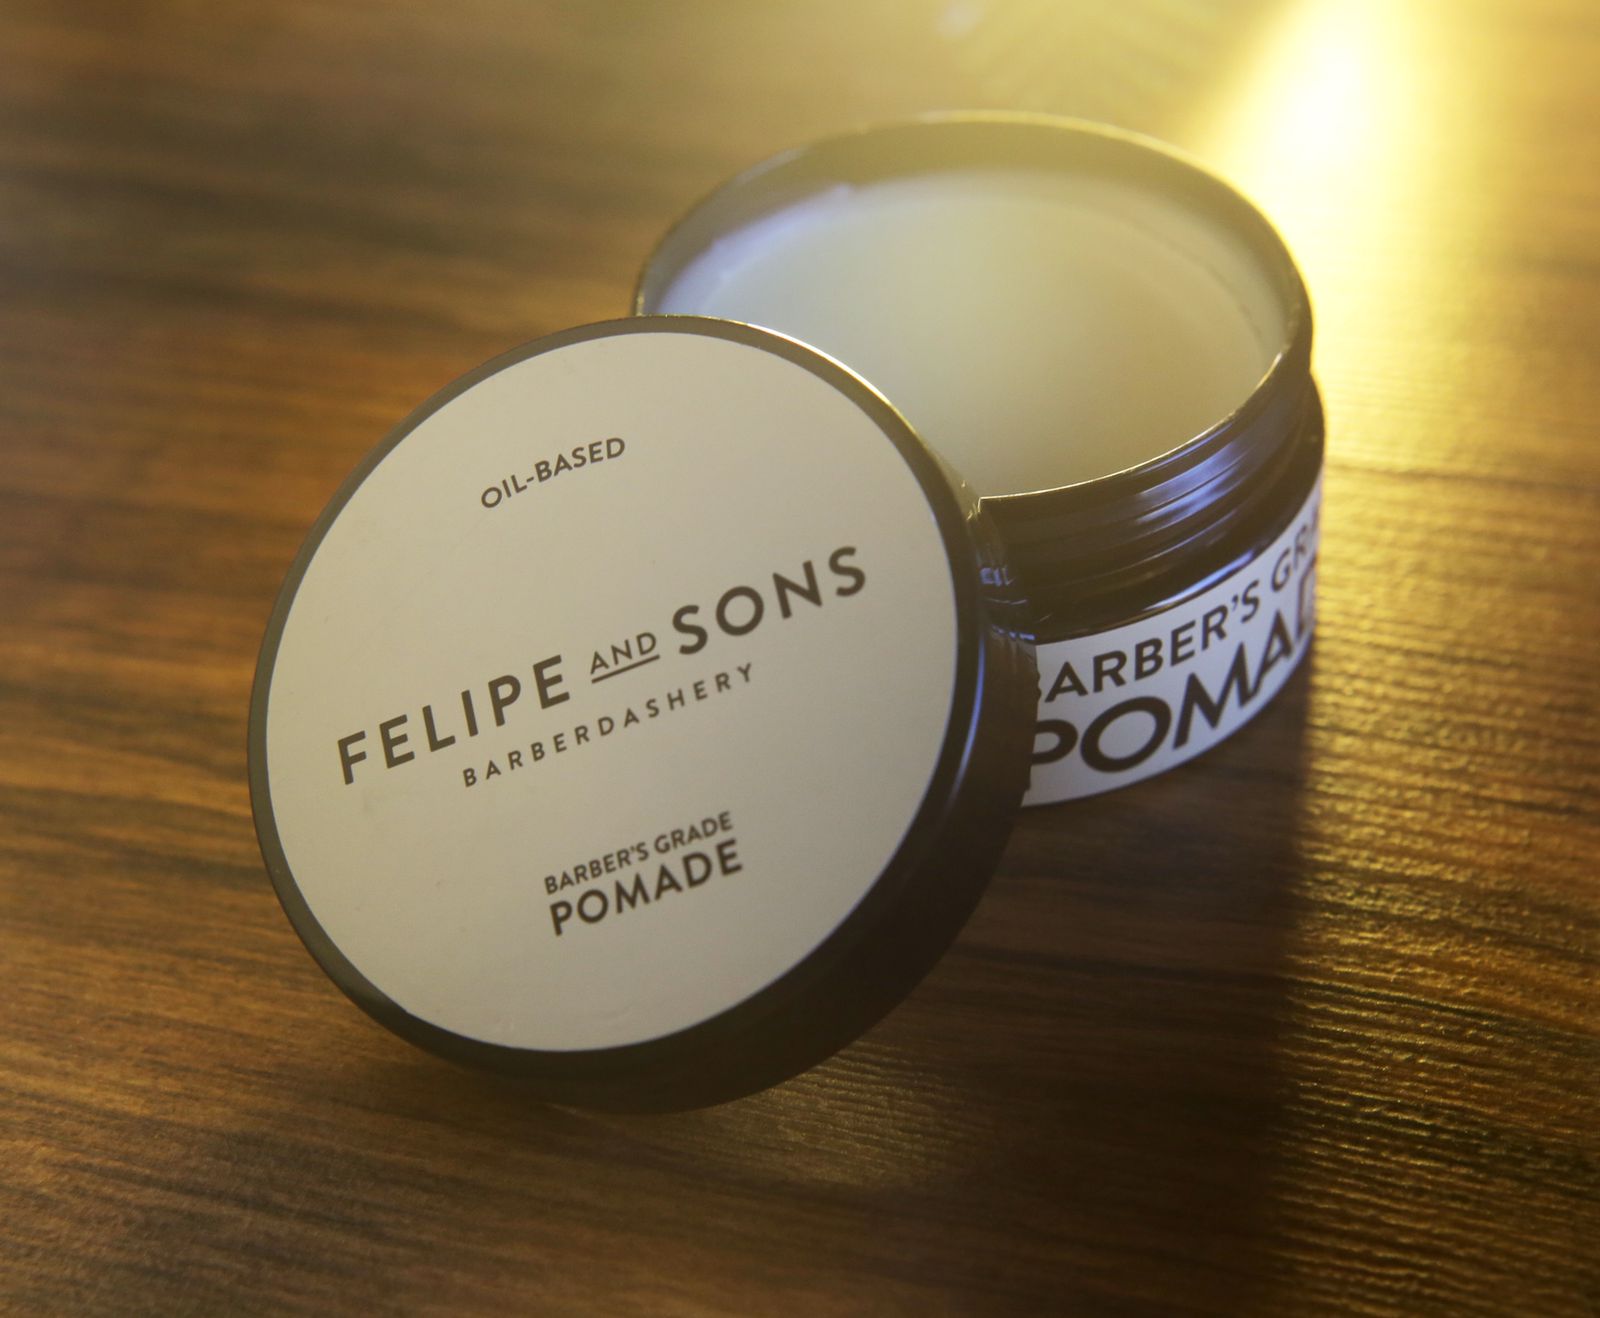 Felipe And Sons ₱3000 PH Gift Card